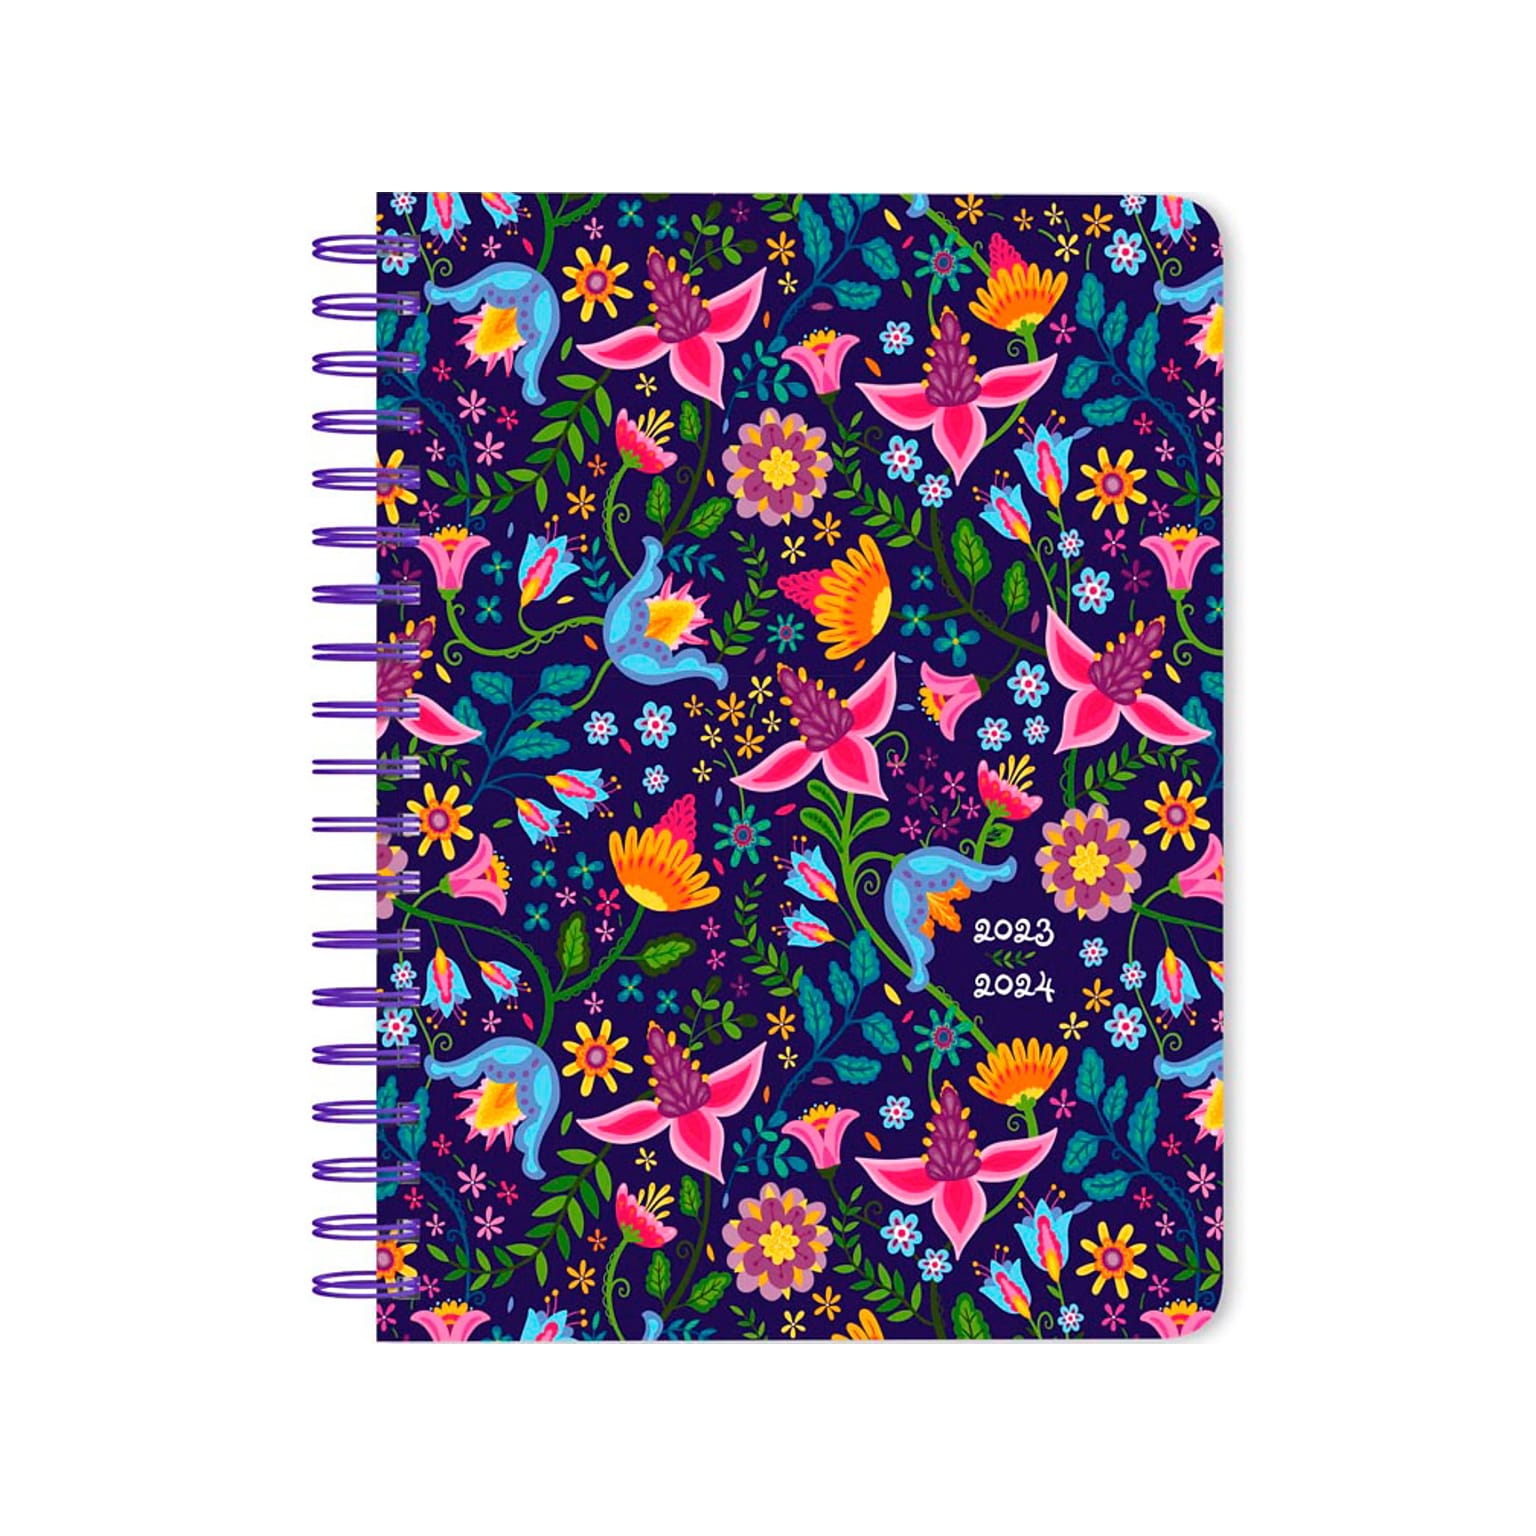 2024 StarGifts Floral Splendor 6 x 7.75 Academic & Calendar Weekly Planner, Paperboard Cover, Multicolor (9781975471972)